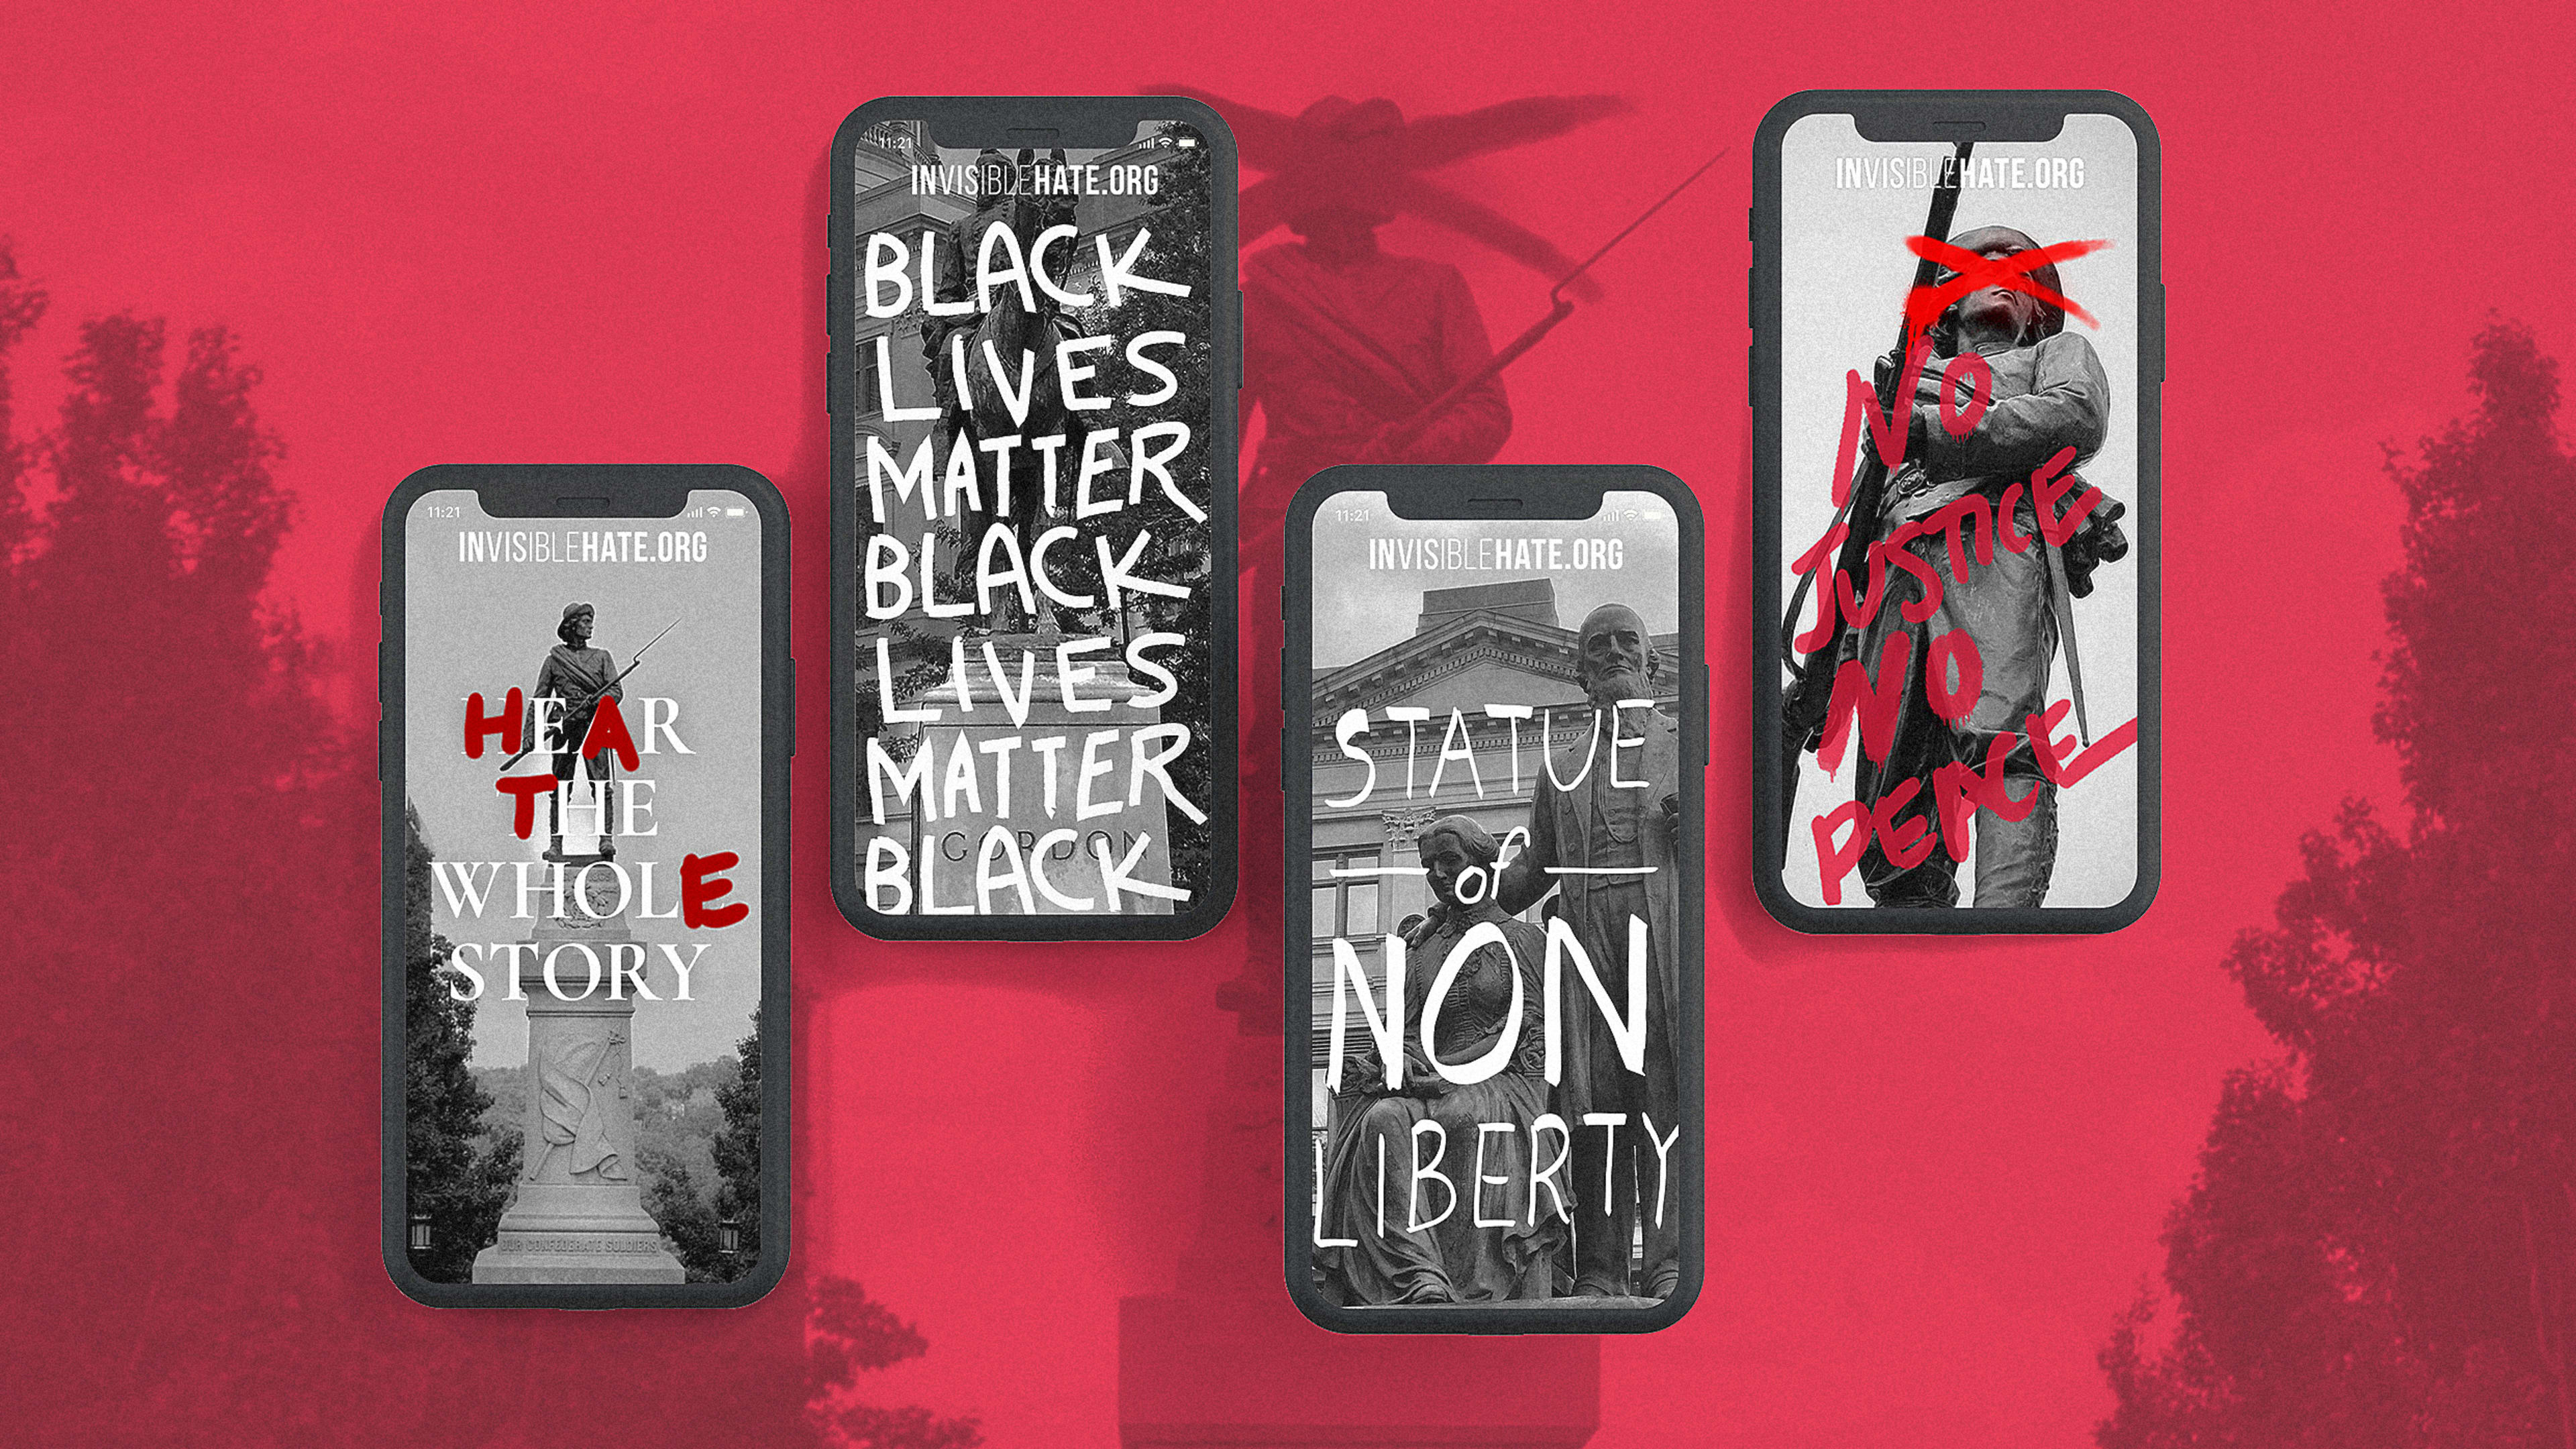 Racist symbols lurk in neighborhoods across the U.S. This new app exposes them